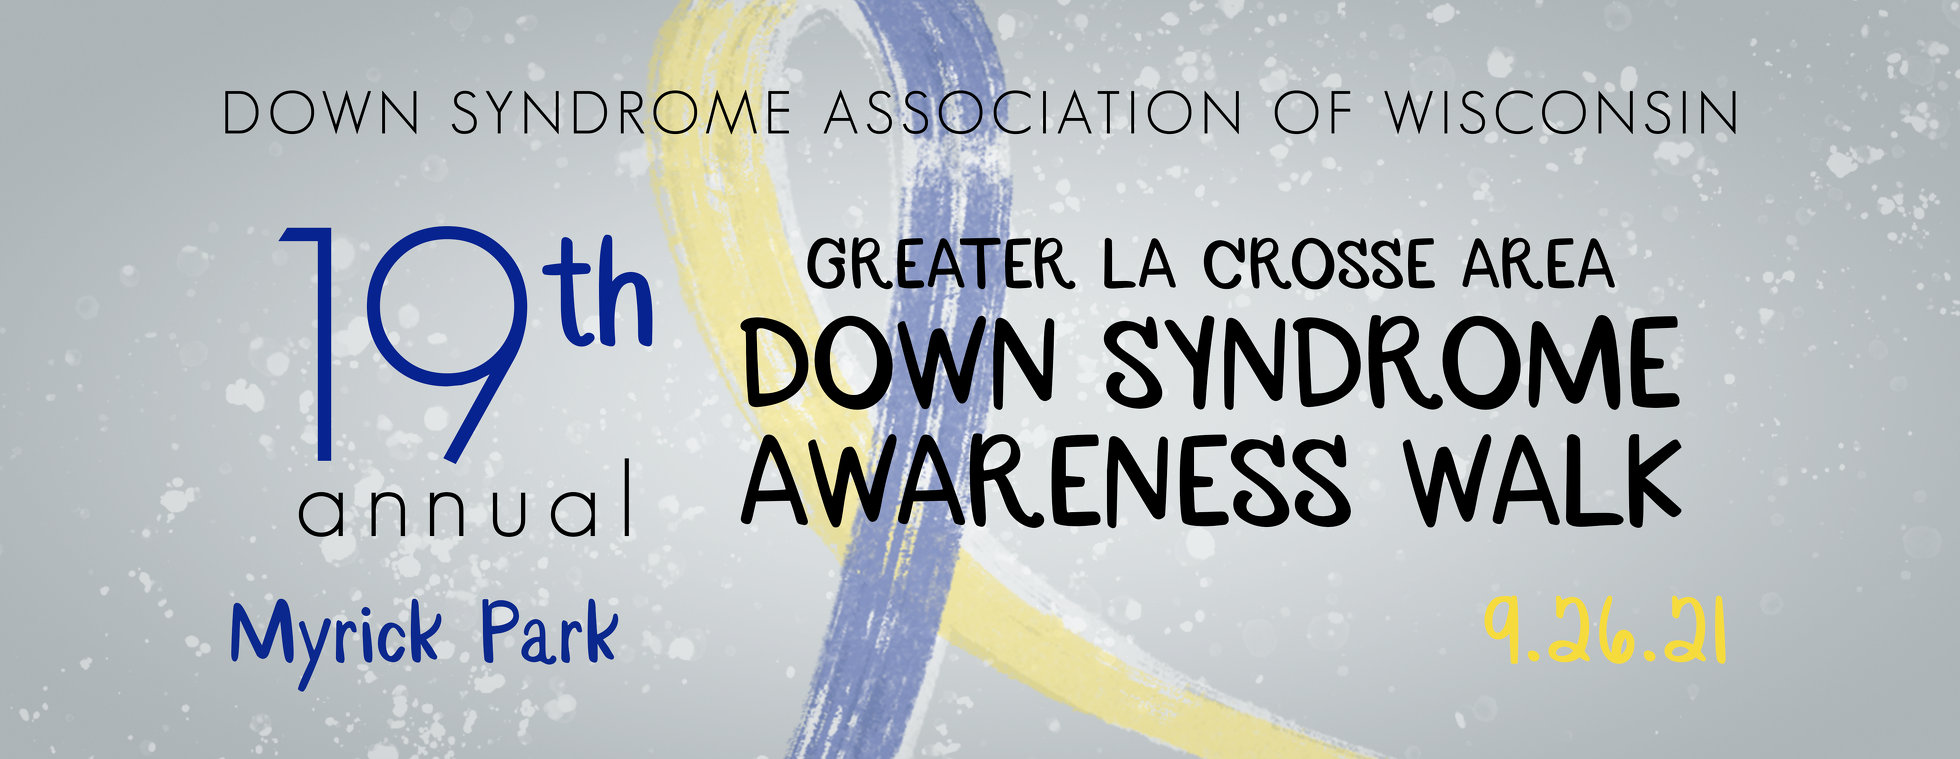 19th Annual DSAW- La Crosse Down Syndrome Awareness Walk